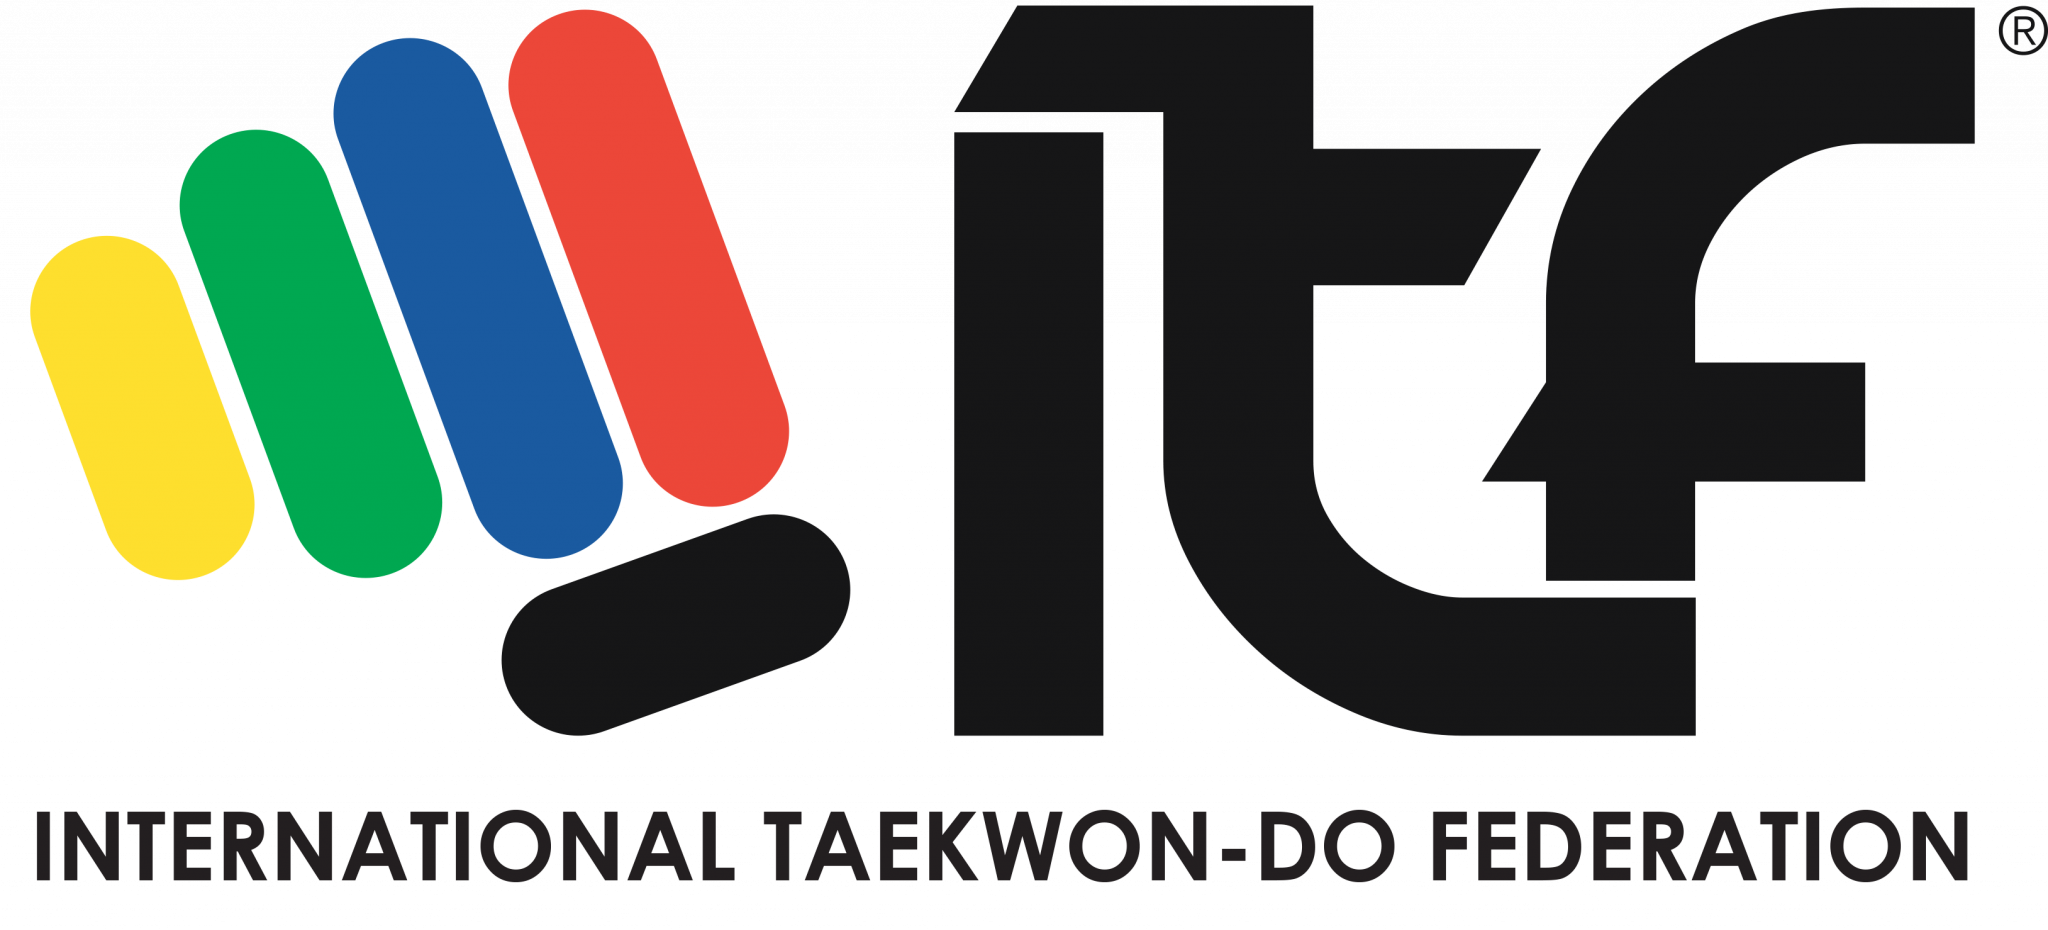 Austria-based International Taekwon-Do Federation declared WADA compliant